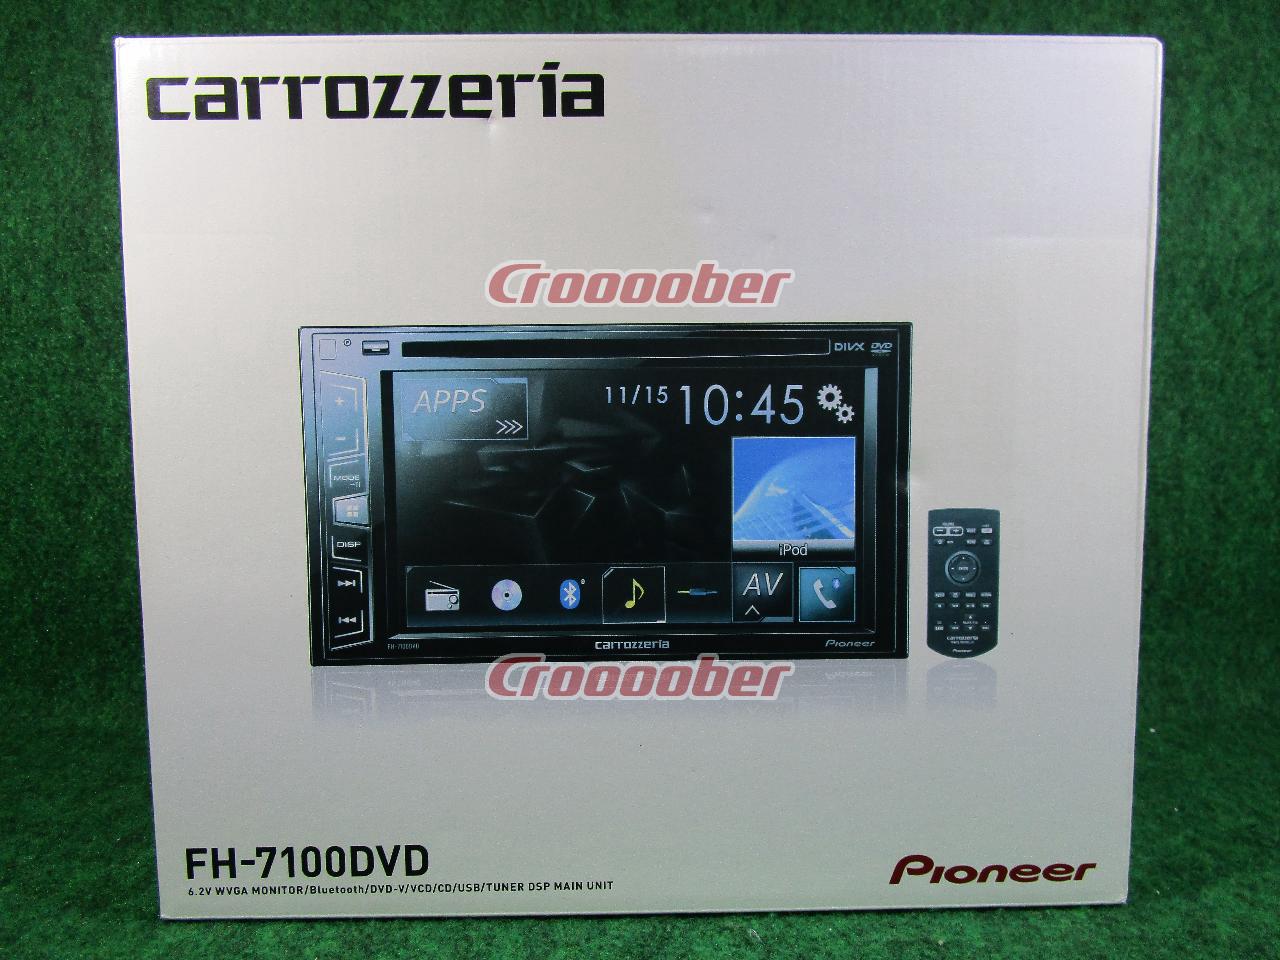 Carrozzeria FH-7100DVD 6.2 Type Wide VGA Monitor / Bluetooth / DVD 